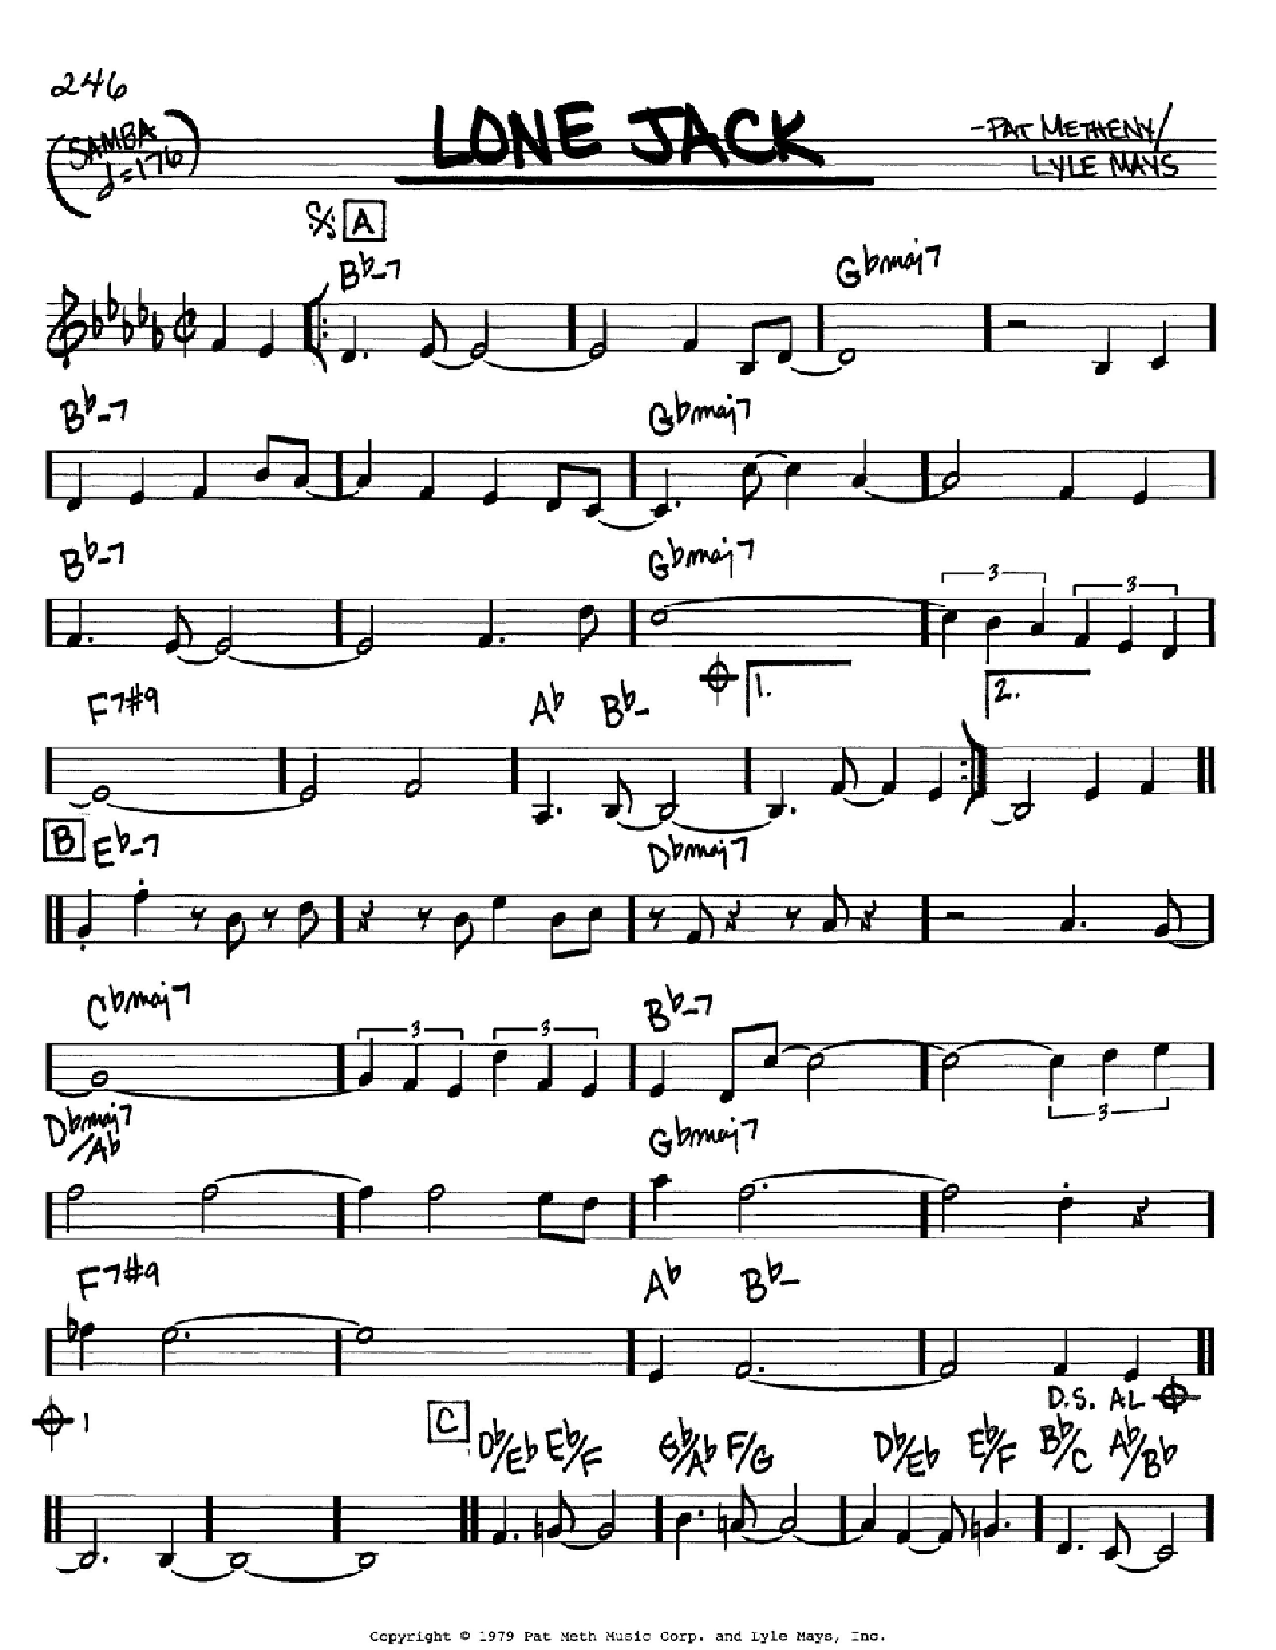 Pat Metheny Lone Jack Sheet Music Notes & Chords for Guitar Tab - Download or Print PDF